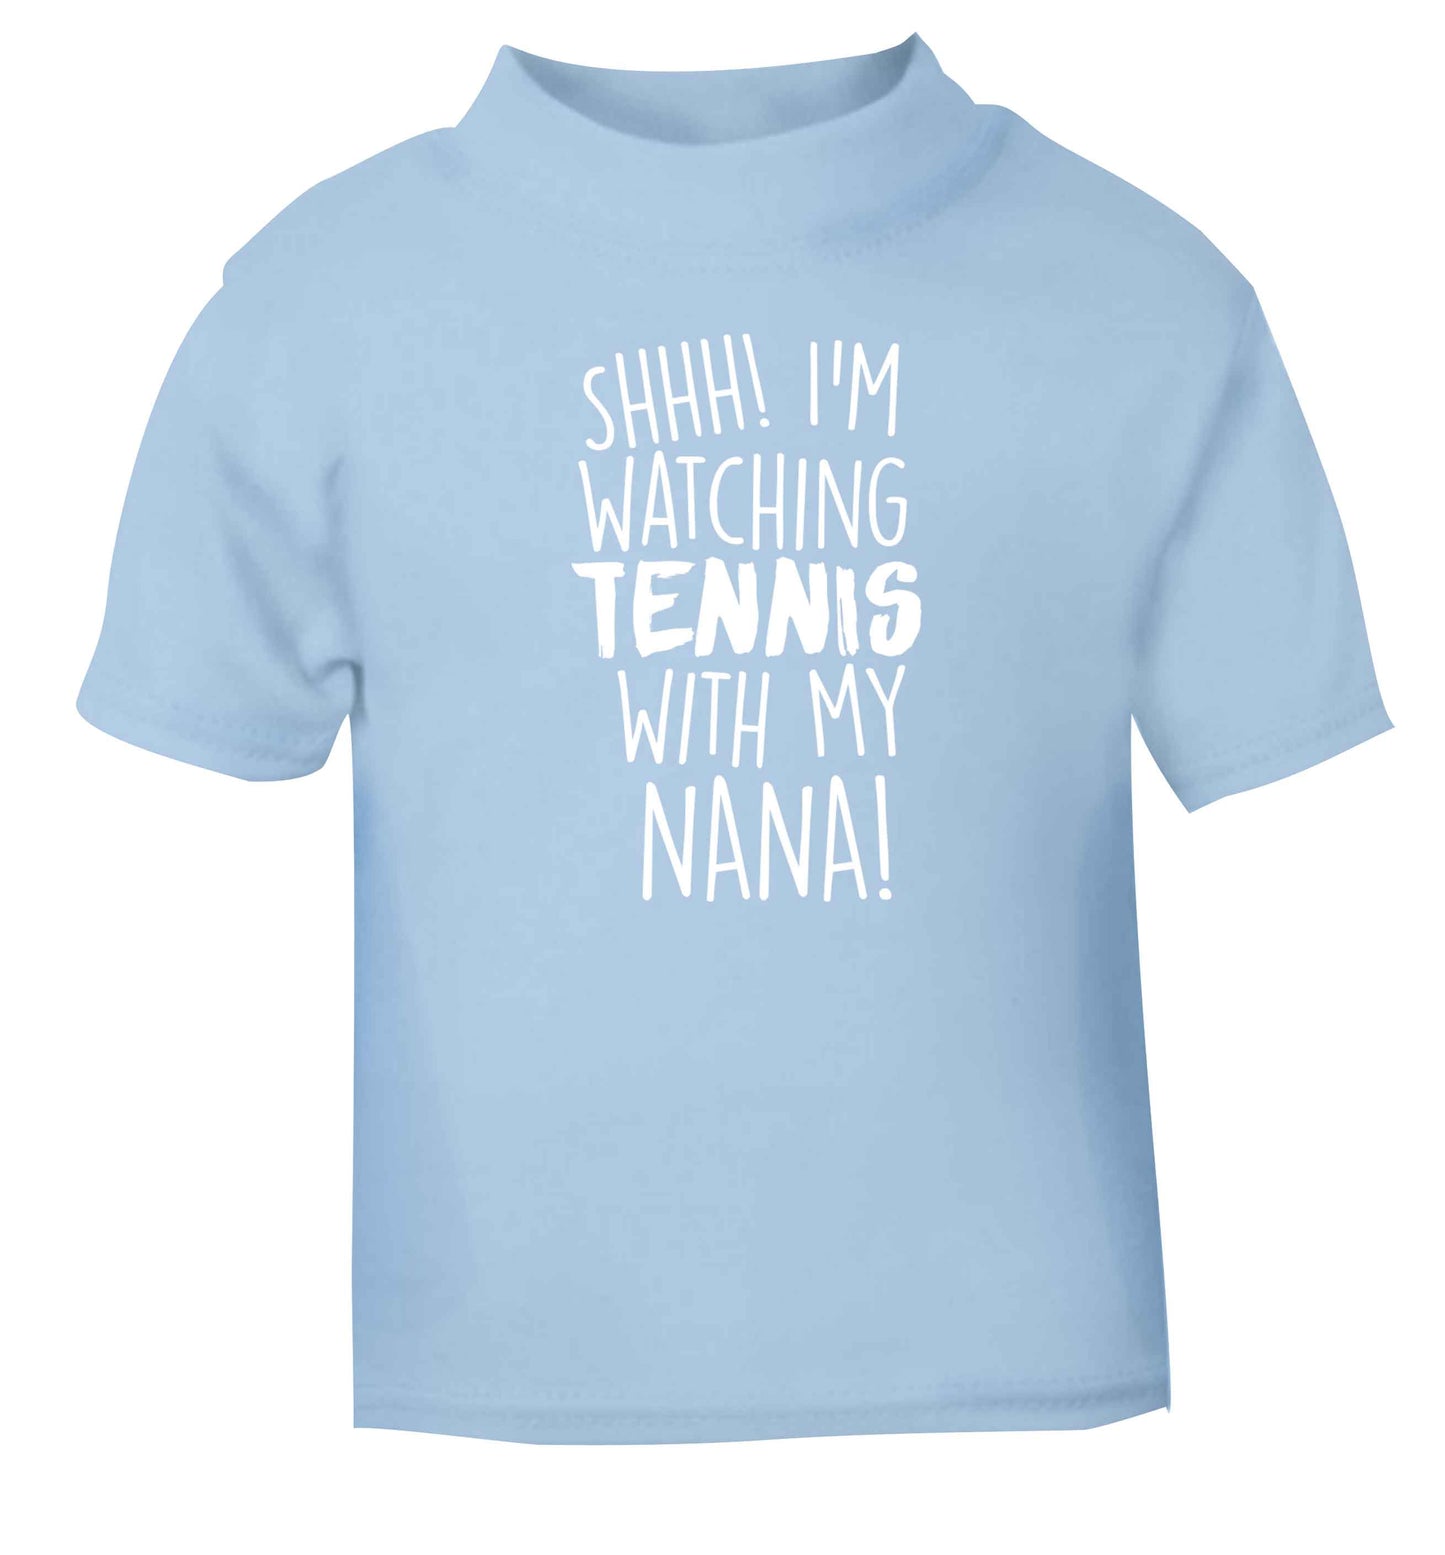 Shh! I'm watching tennis with my nana! light blue Baby Toddler Tshirt 2 Years